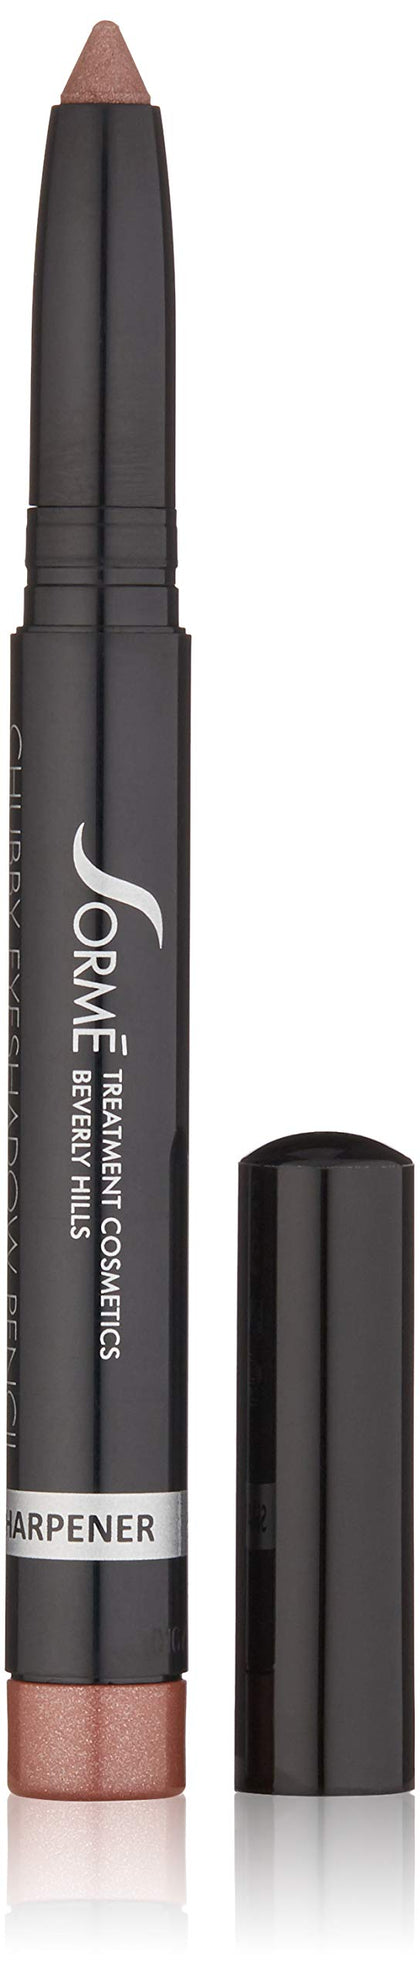 Sorme' Treatment Cosmetics Jumbo Mechanical Eyeshadow Pencils, Flirting Games, 0.16 oz.